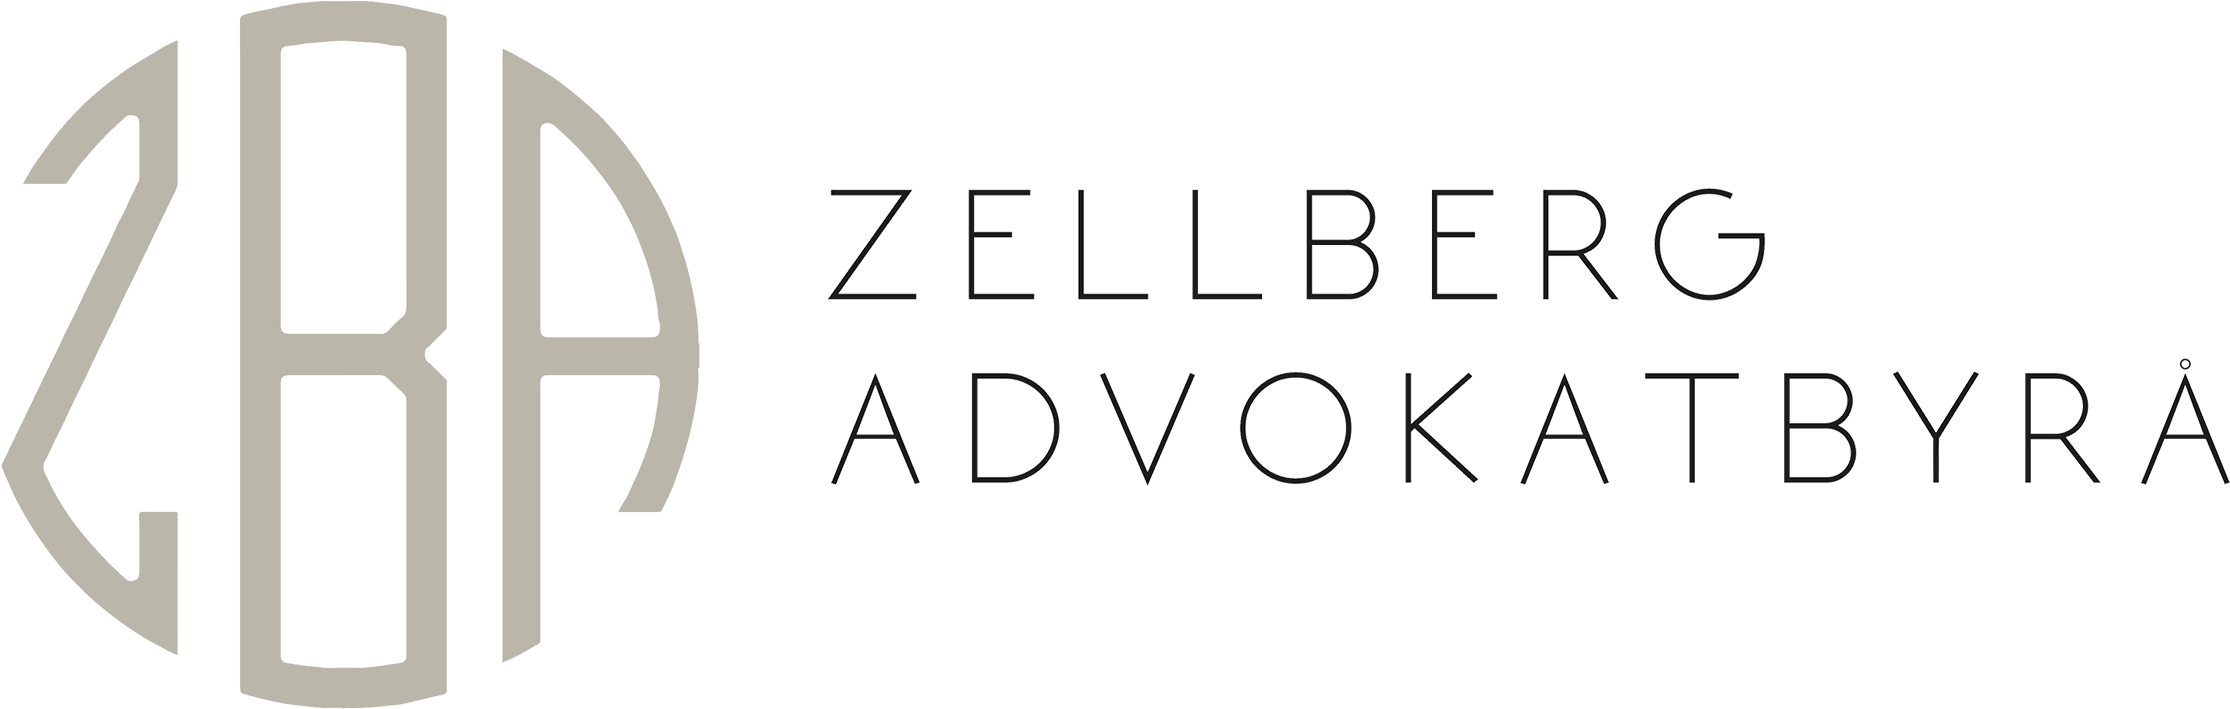 Zellberg logotype